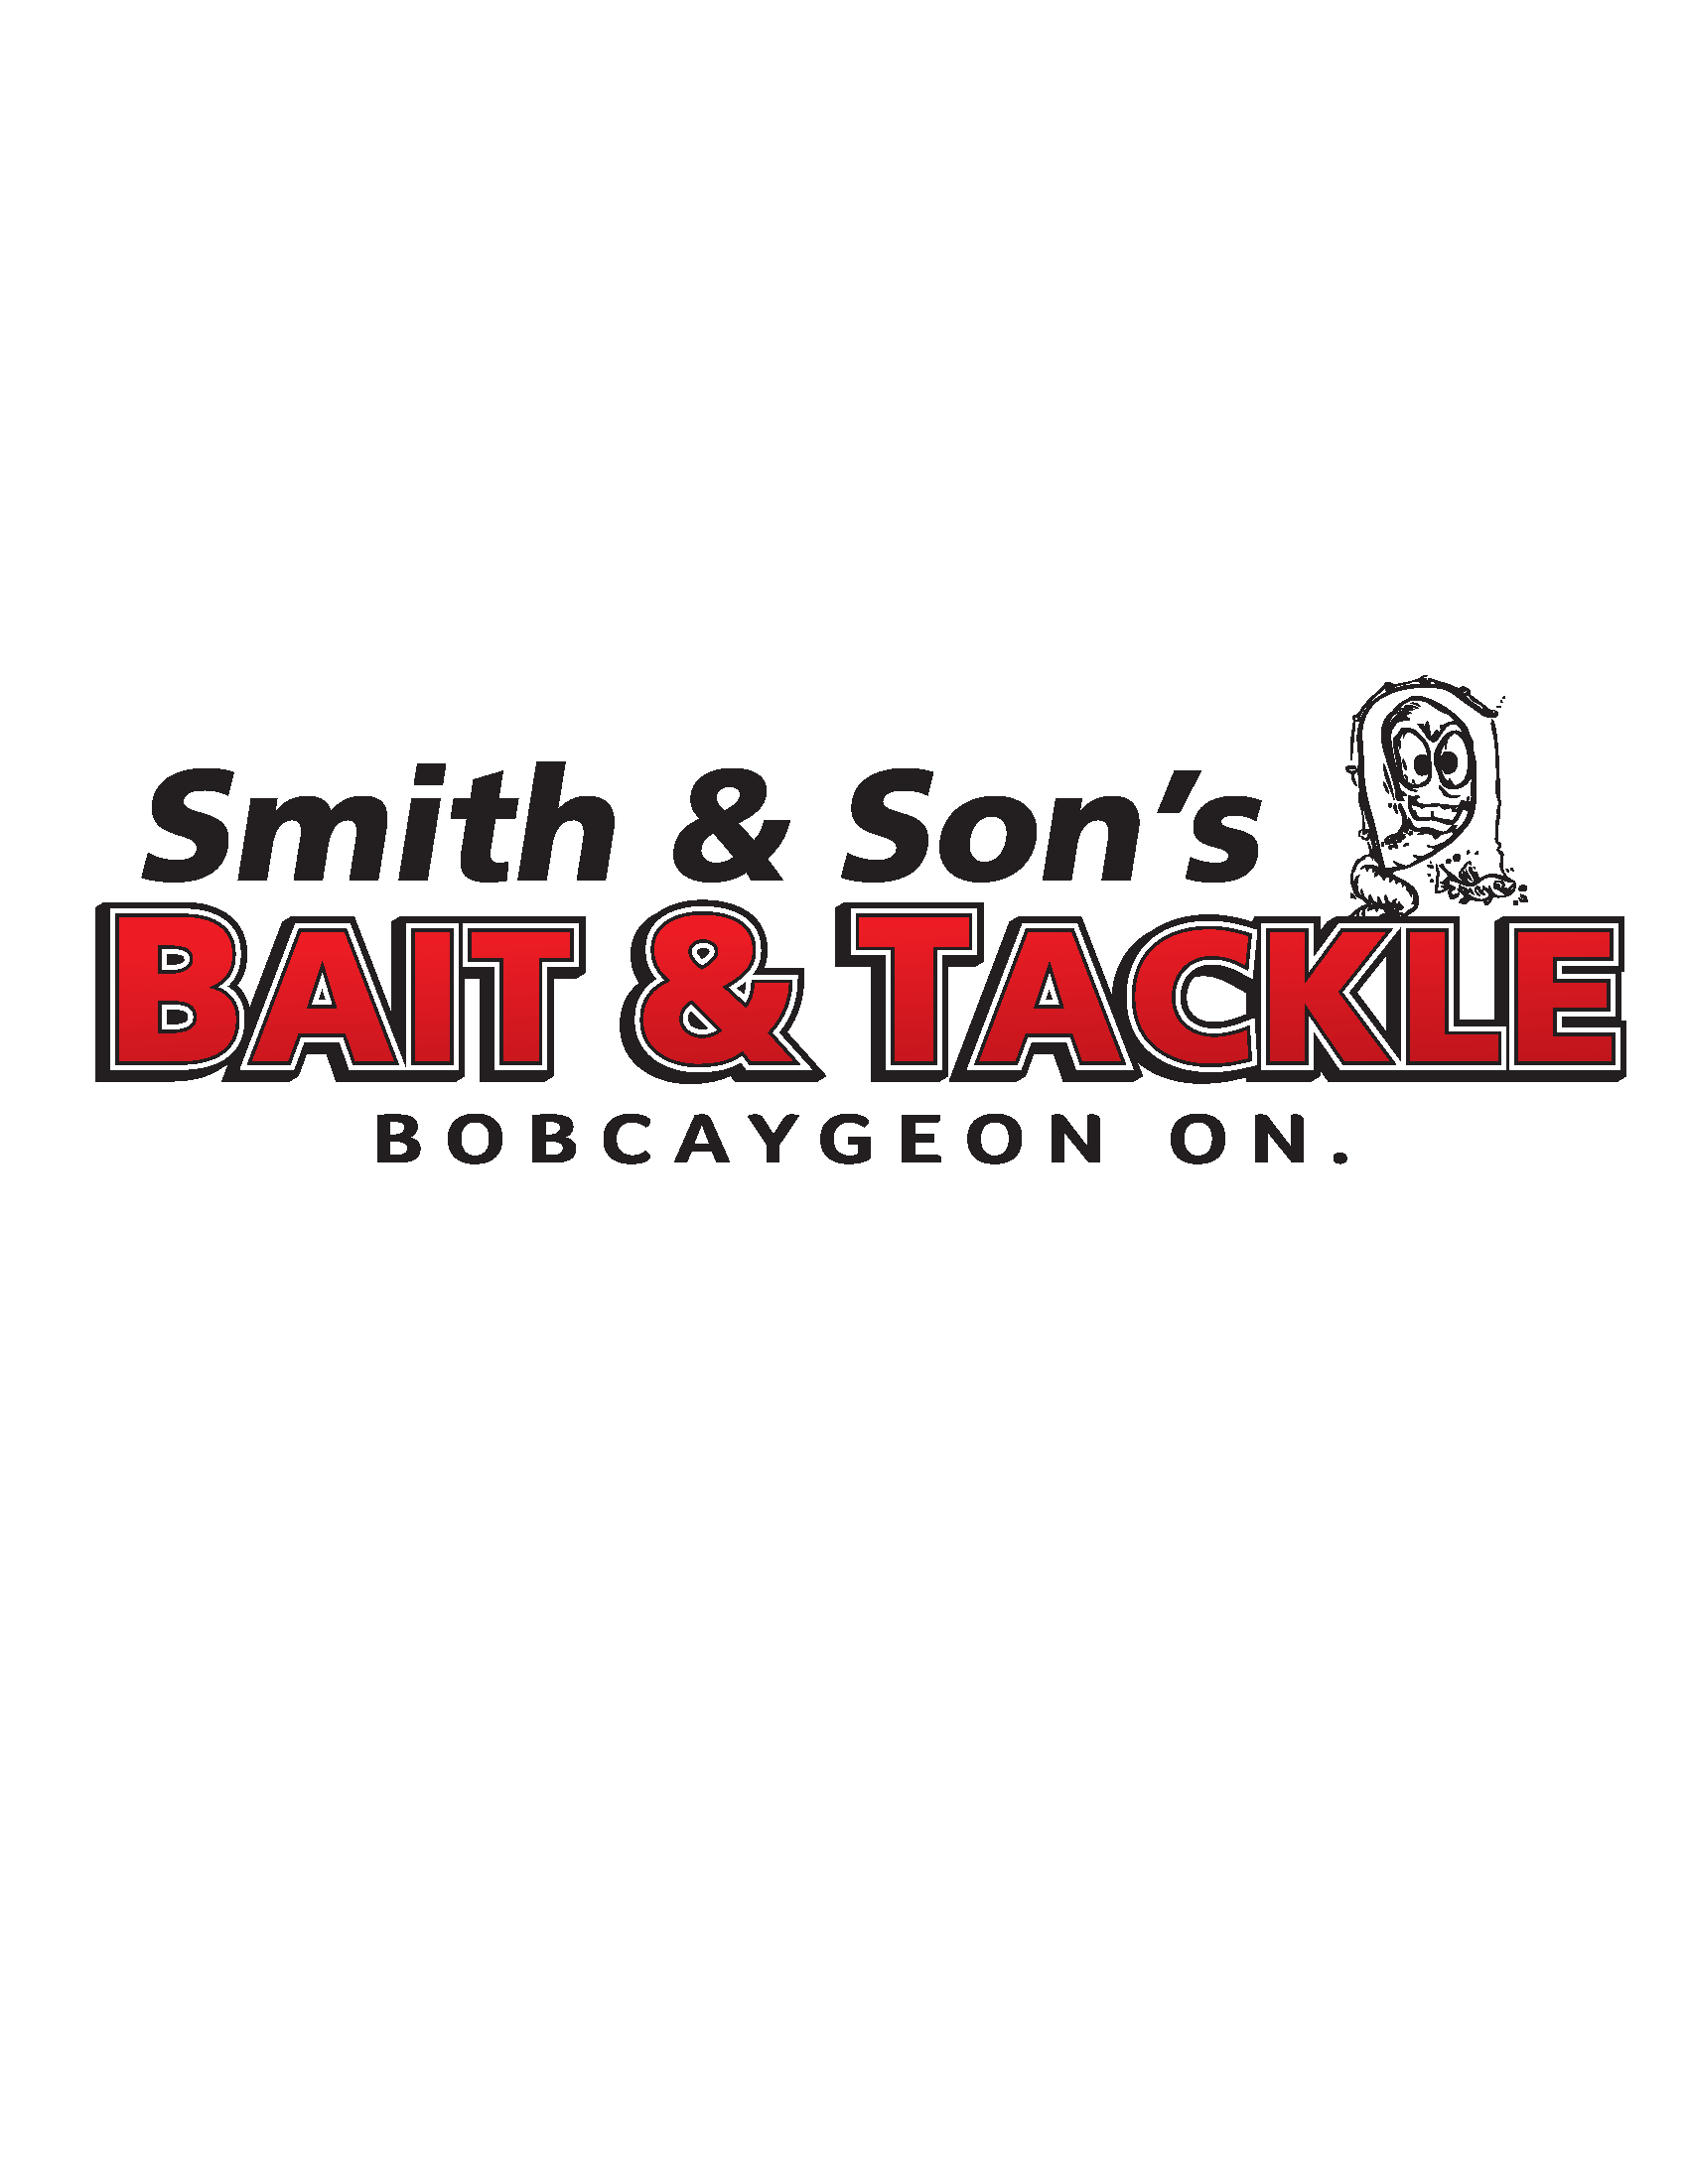 Smith & Son's Bait & Tackle